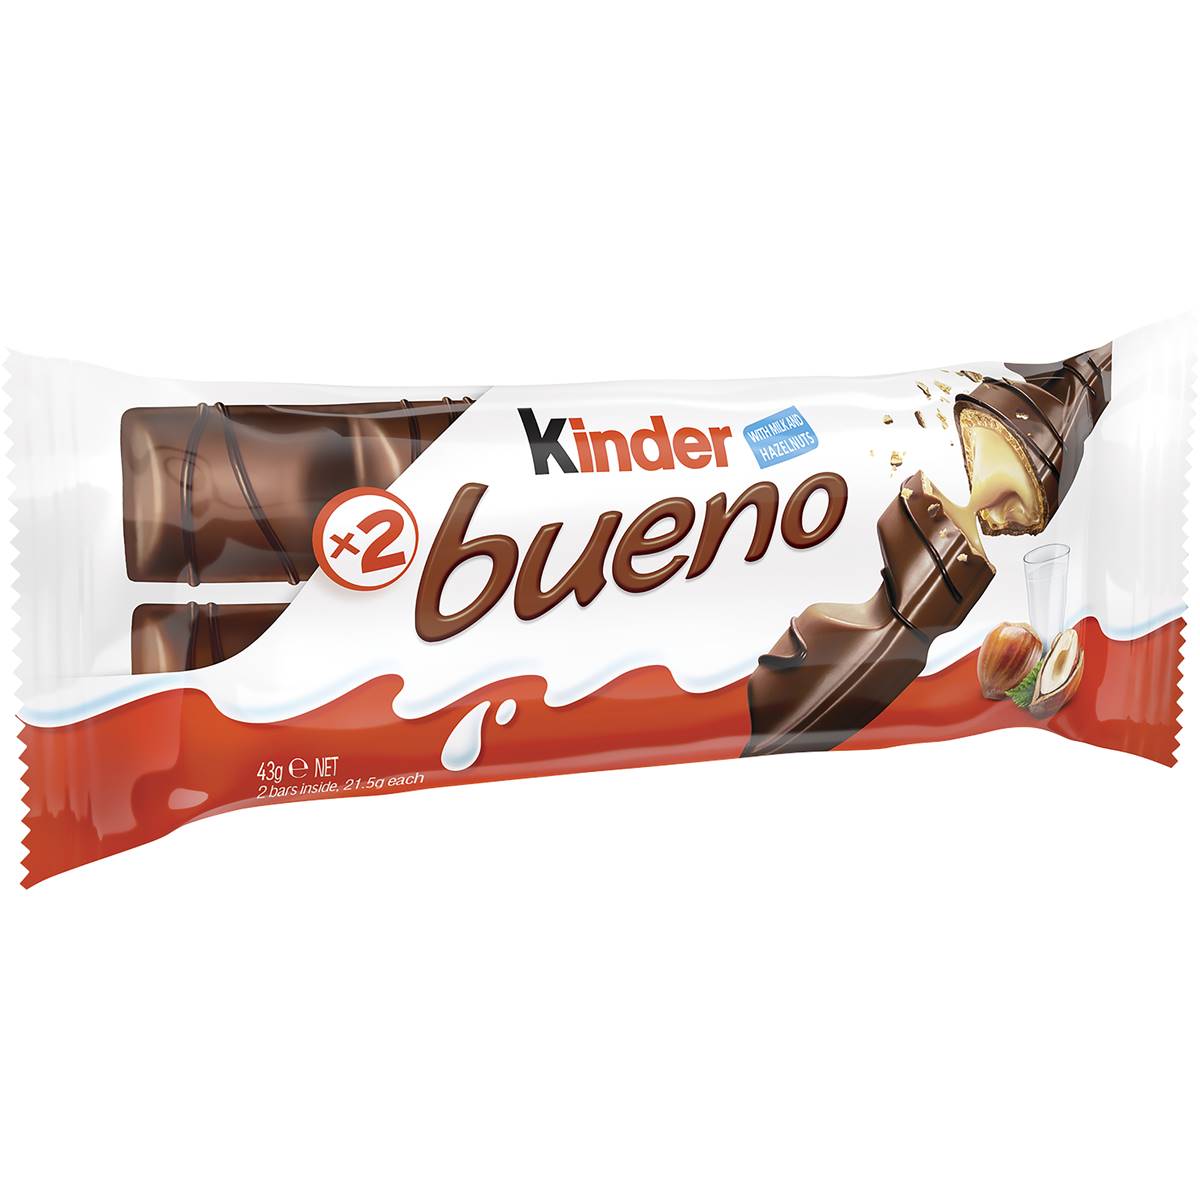 Calories in Kinder Bueno Milk Chocolate Bar calcount